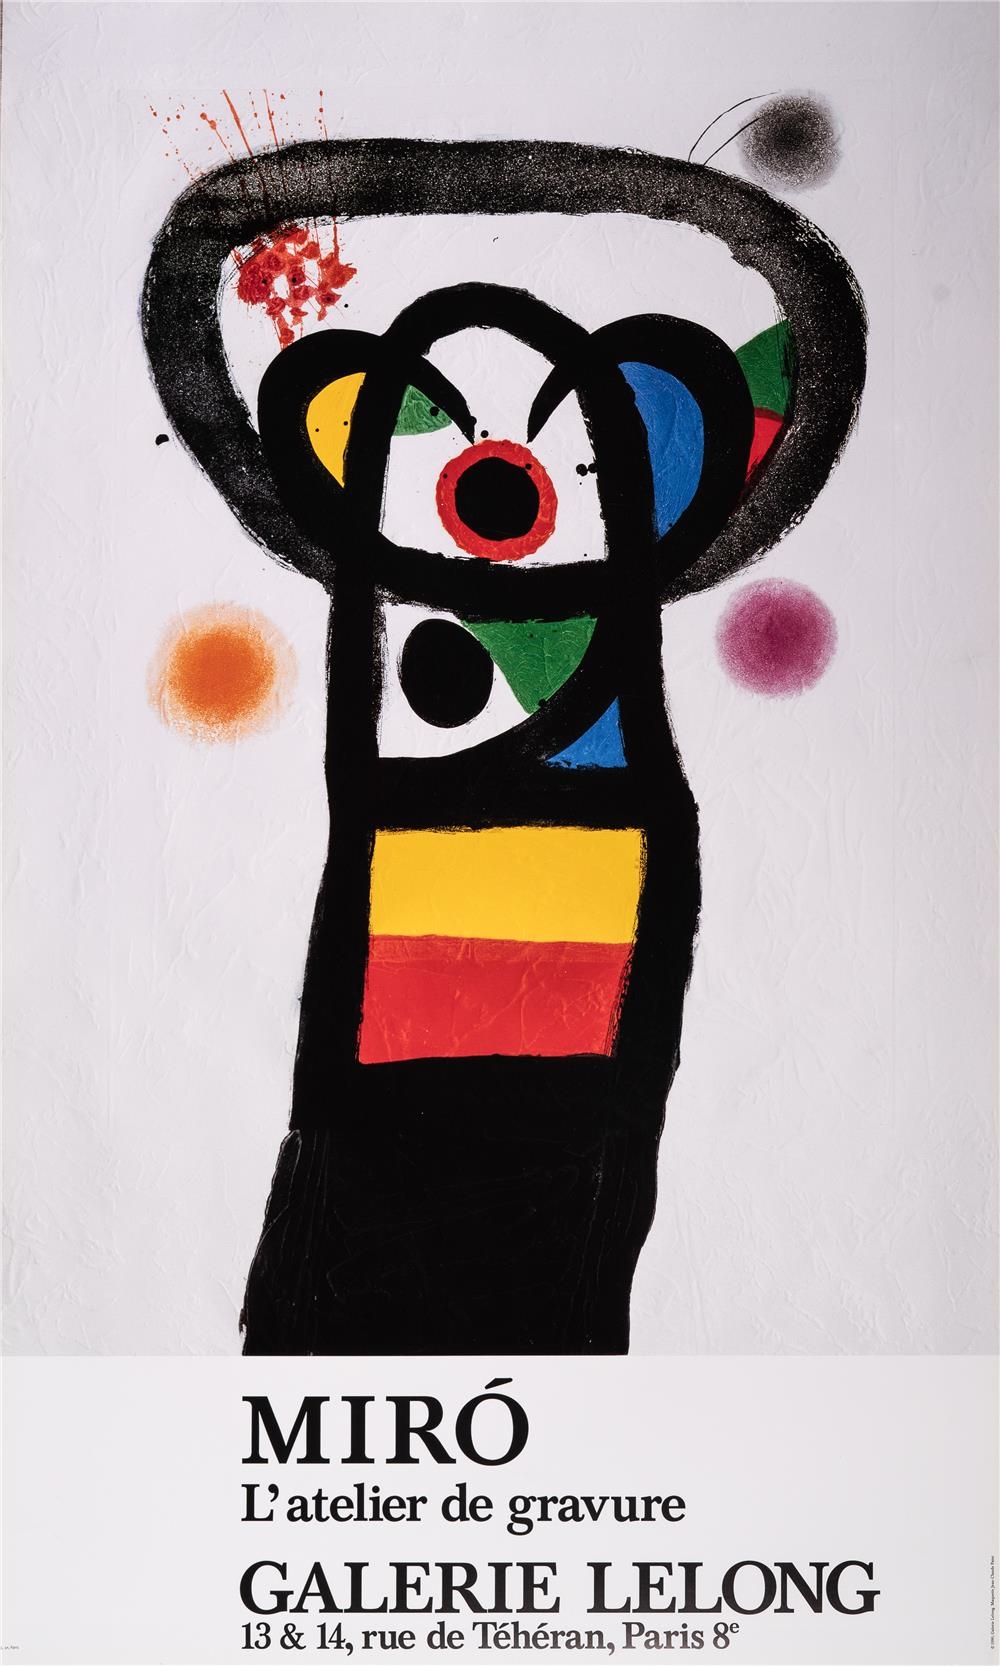 146 (Joan Miró)